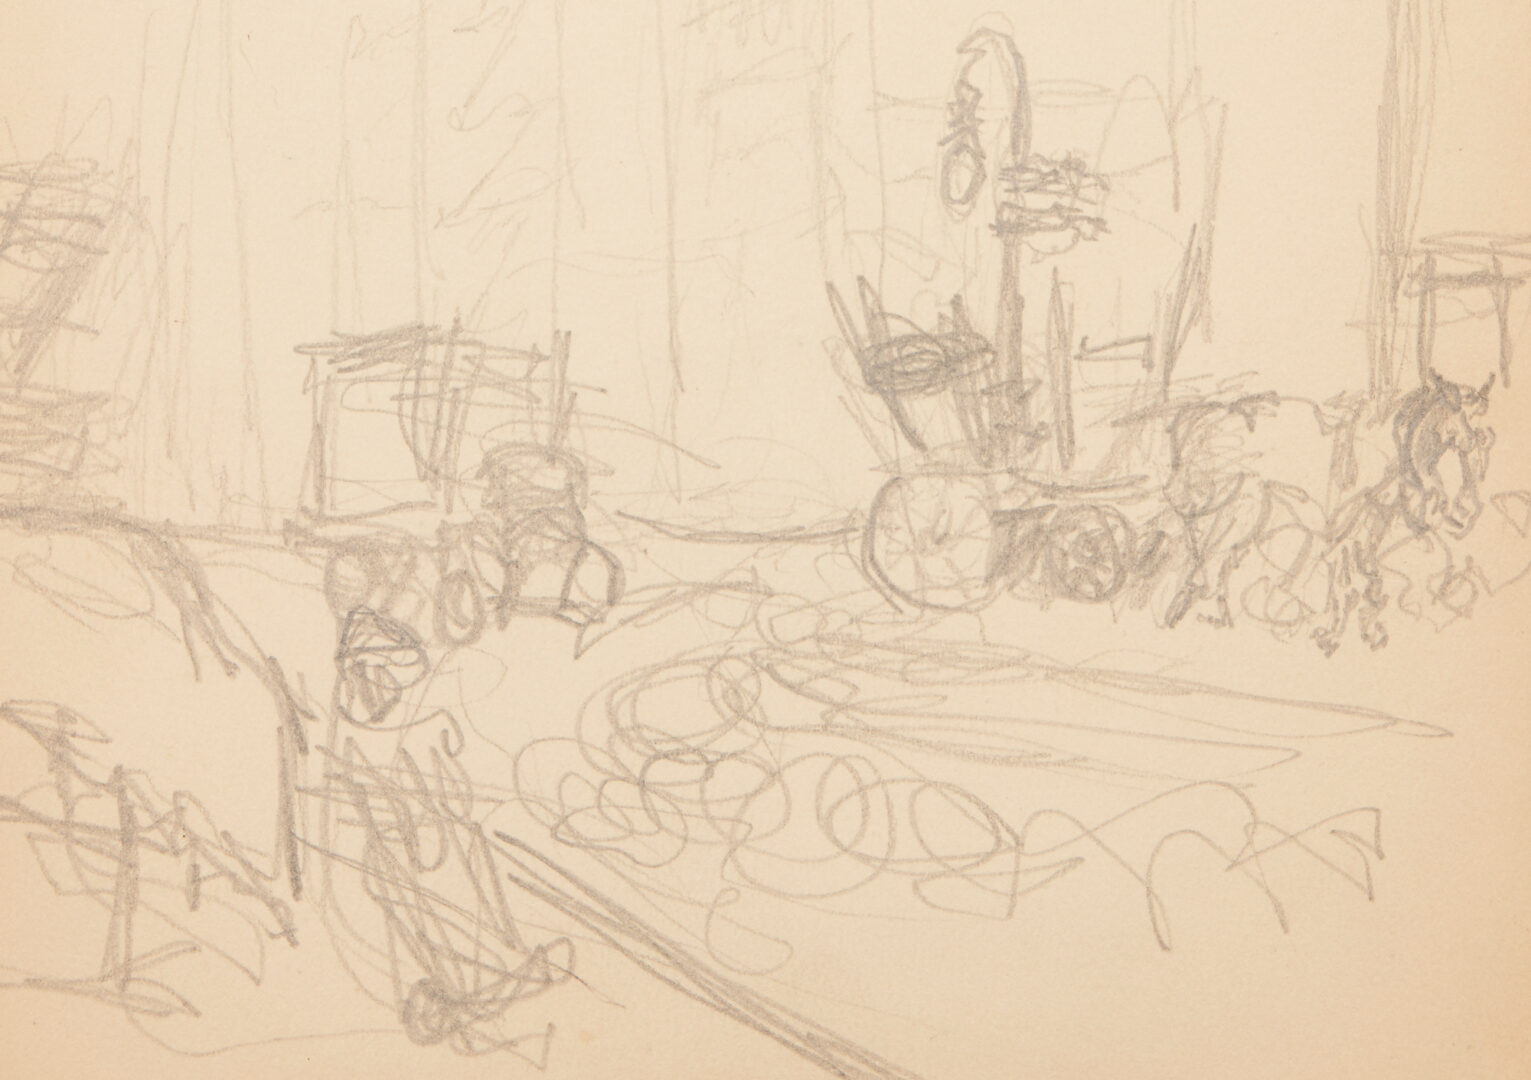 Lot 146: 4 Joseph Delaney New York Street Scenes, incl. 1 Watercolor & 3 Pencil Drawings, 1 Signed